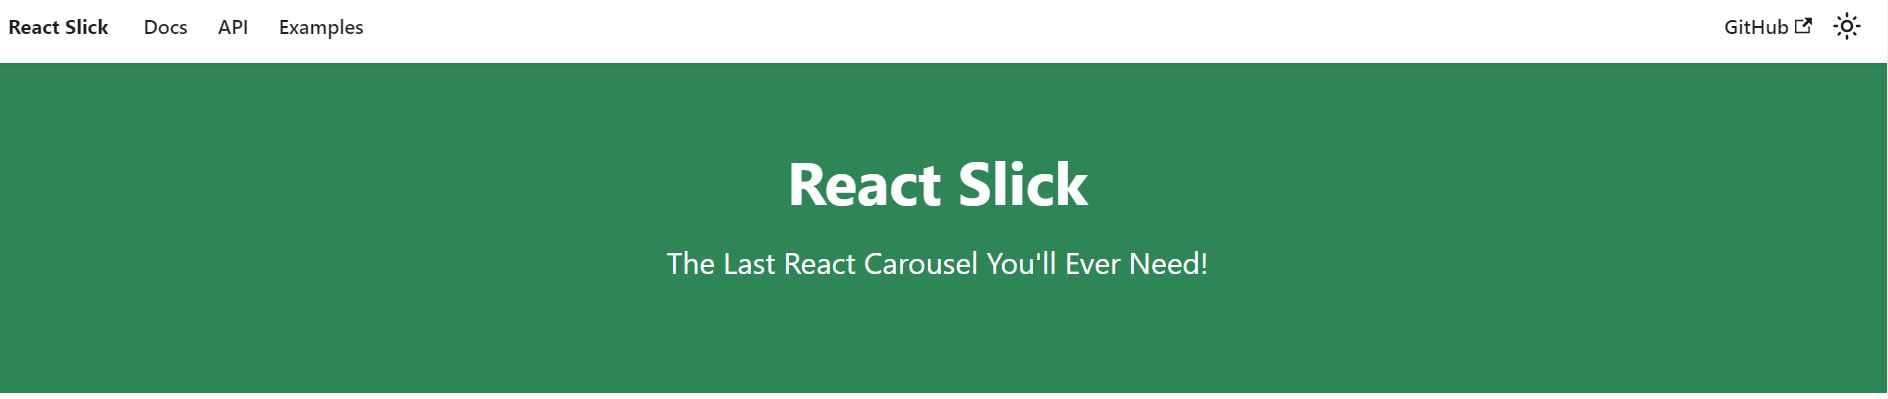 React Slick